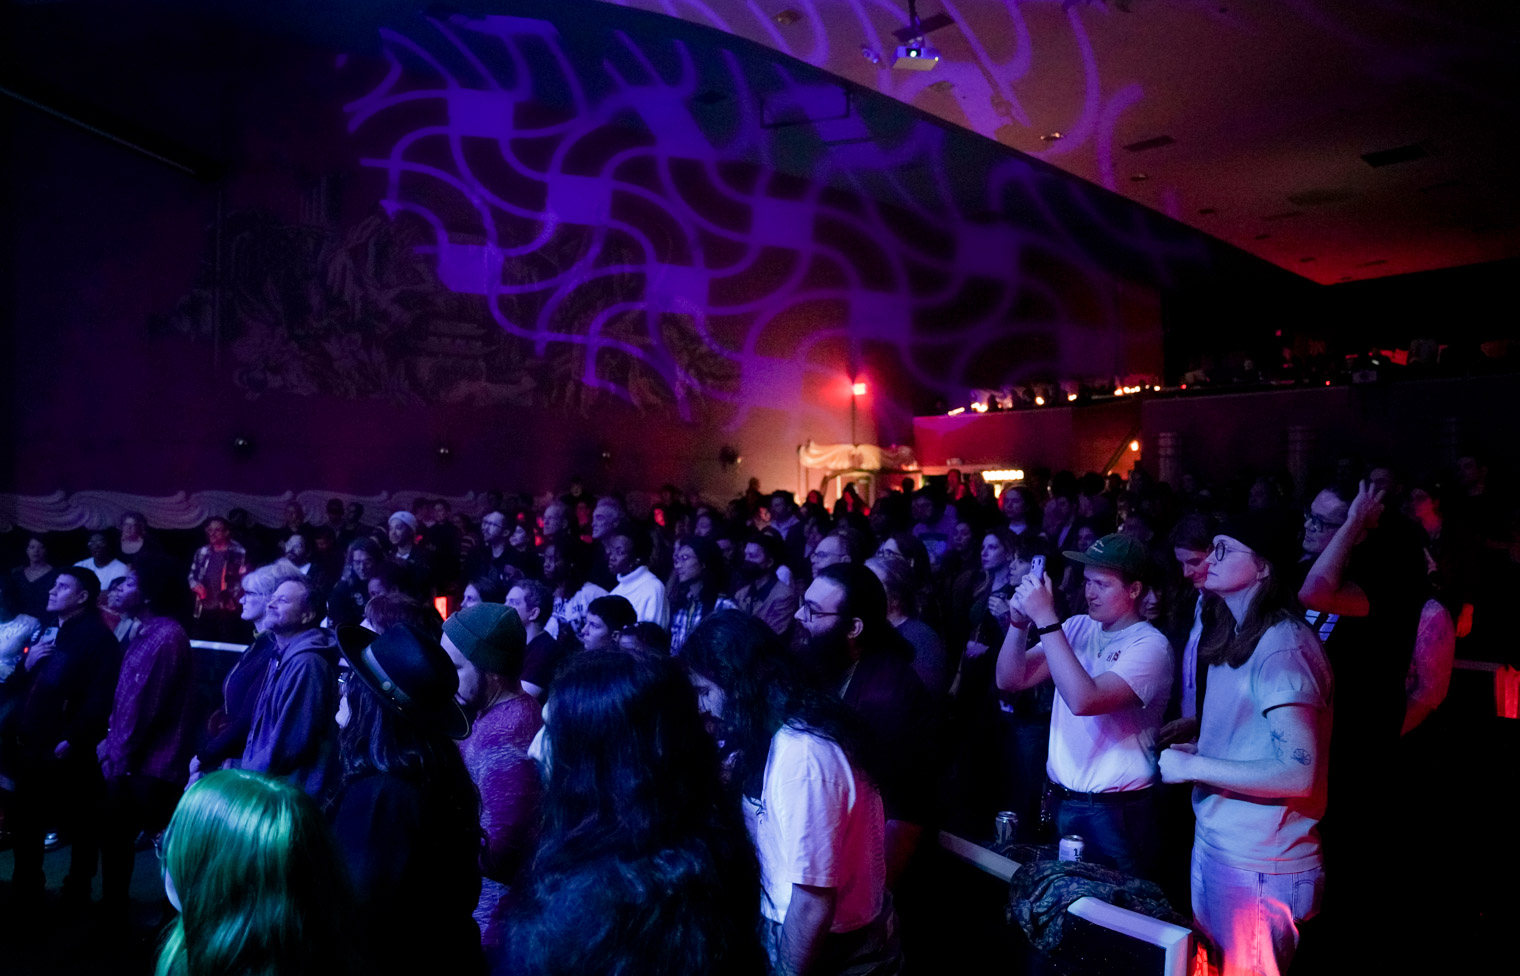 A crowd inside a music venue